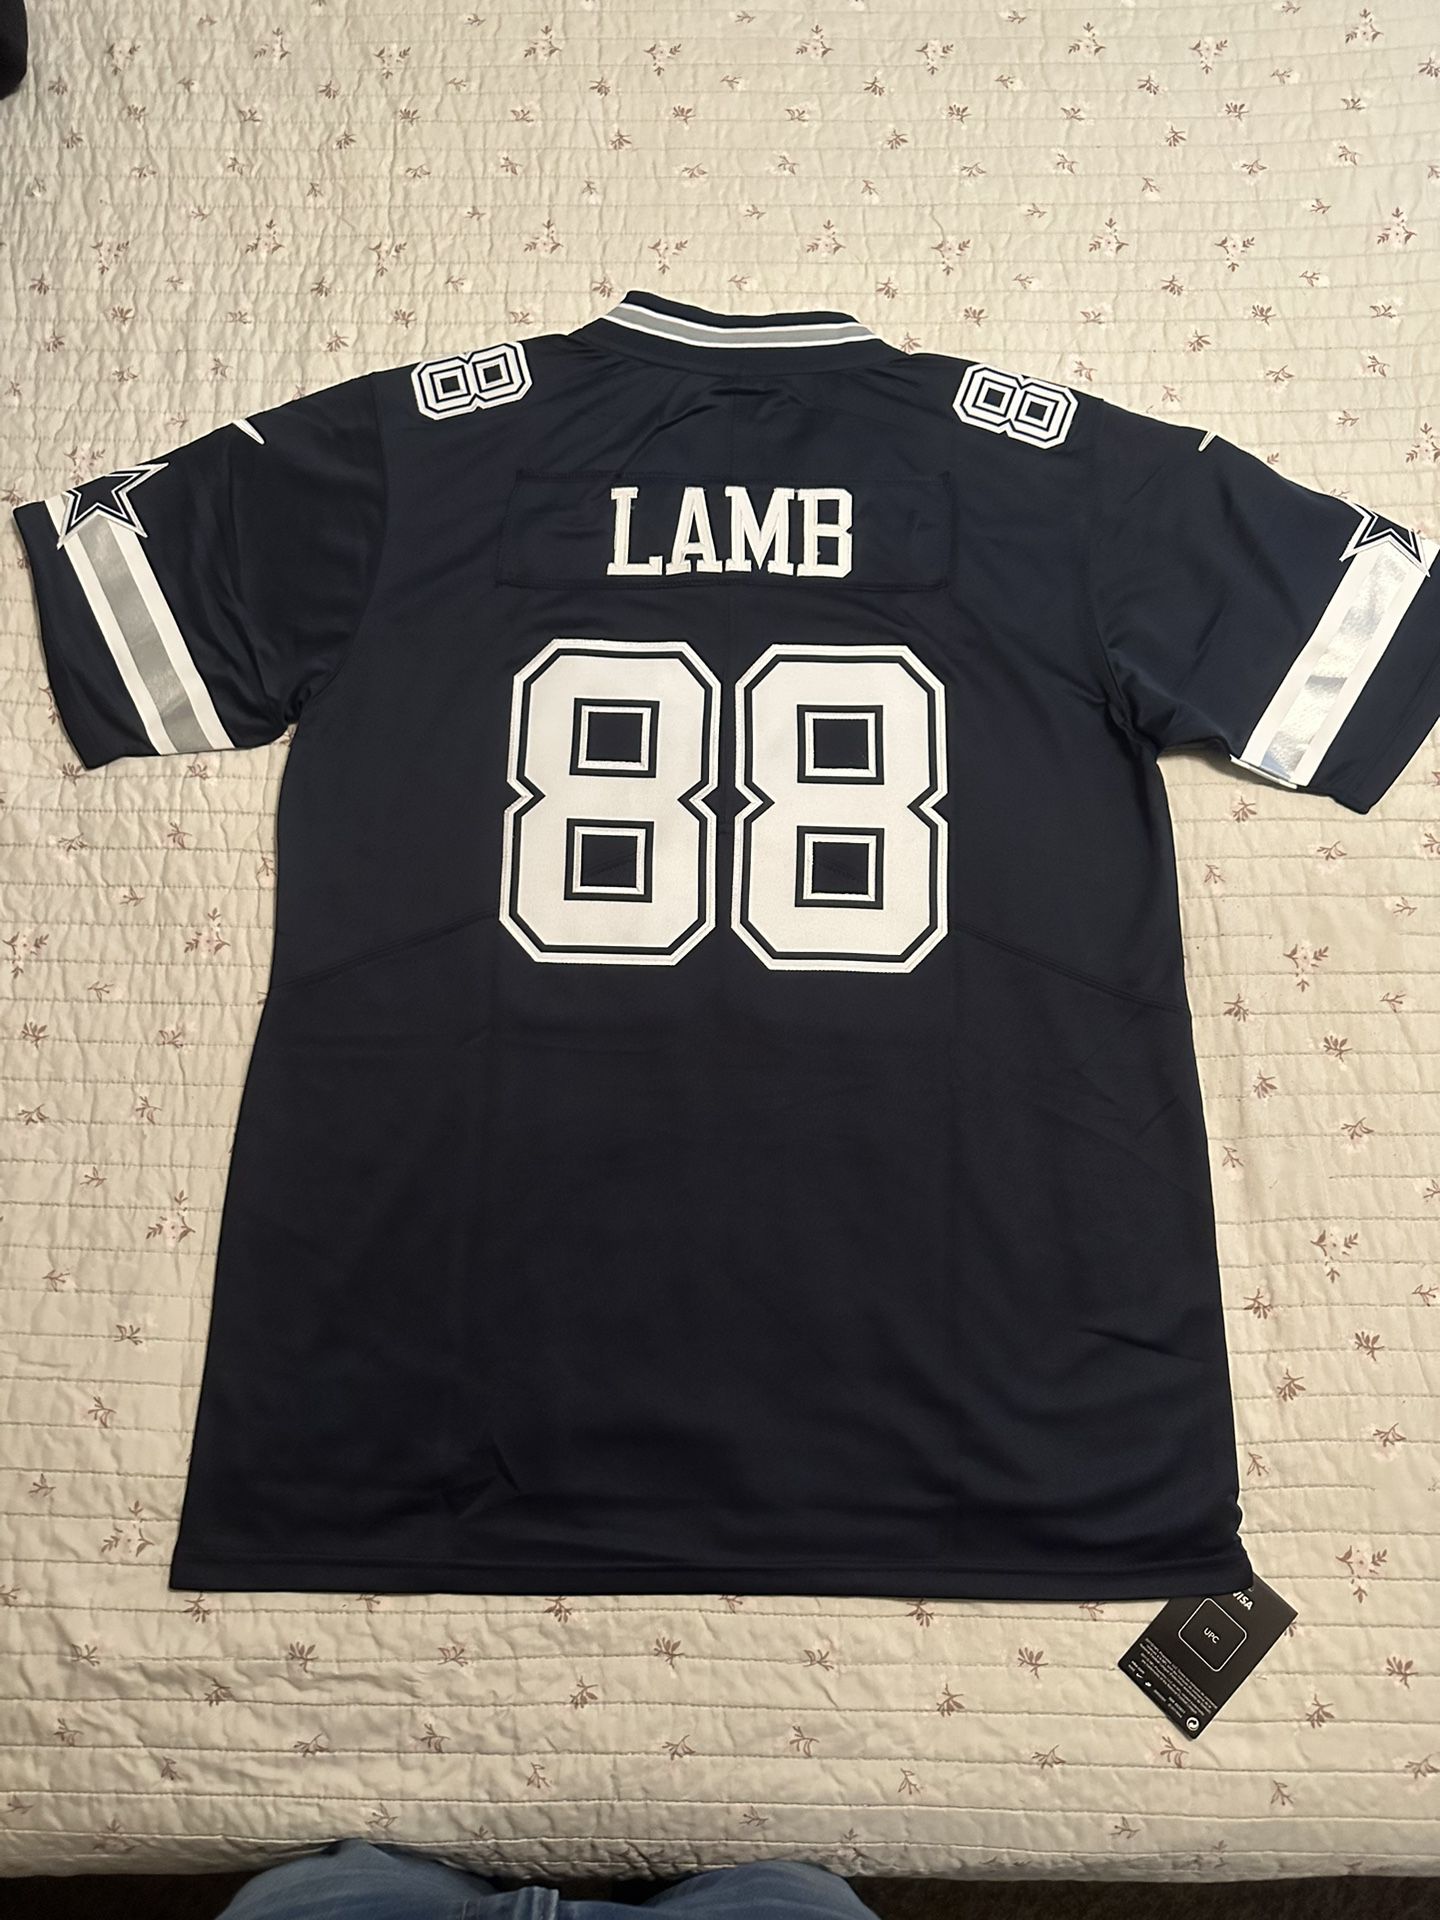 Cd Lamb Jersey for Sale in San Antonio, TX - OfferUp